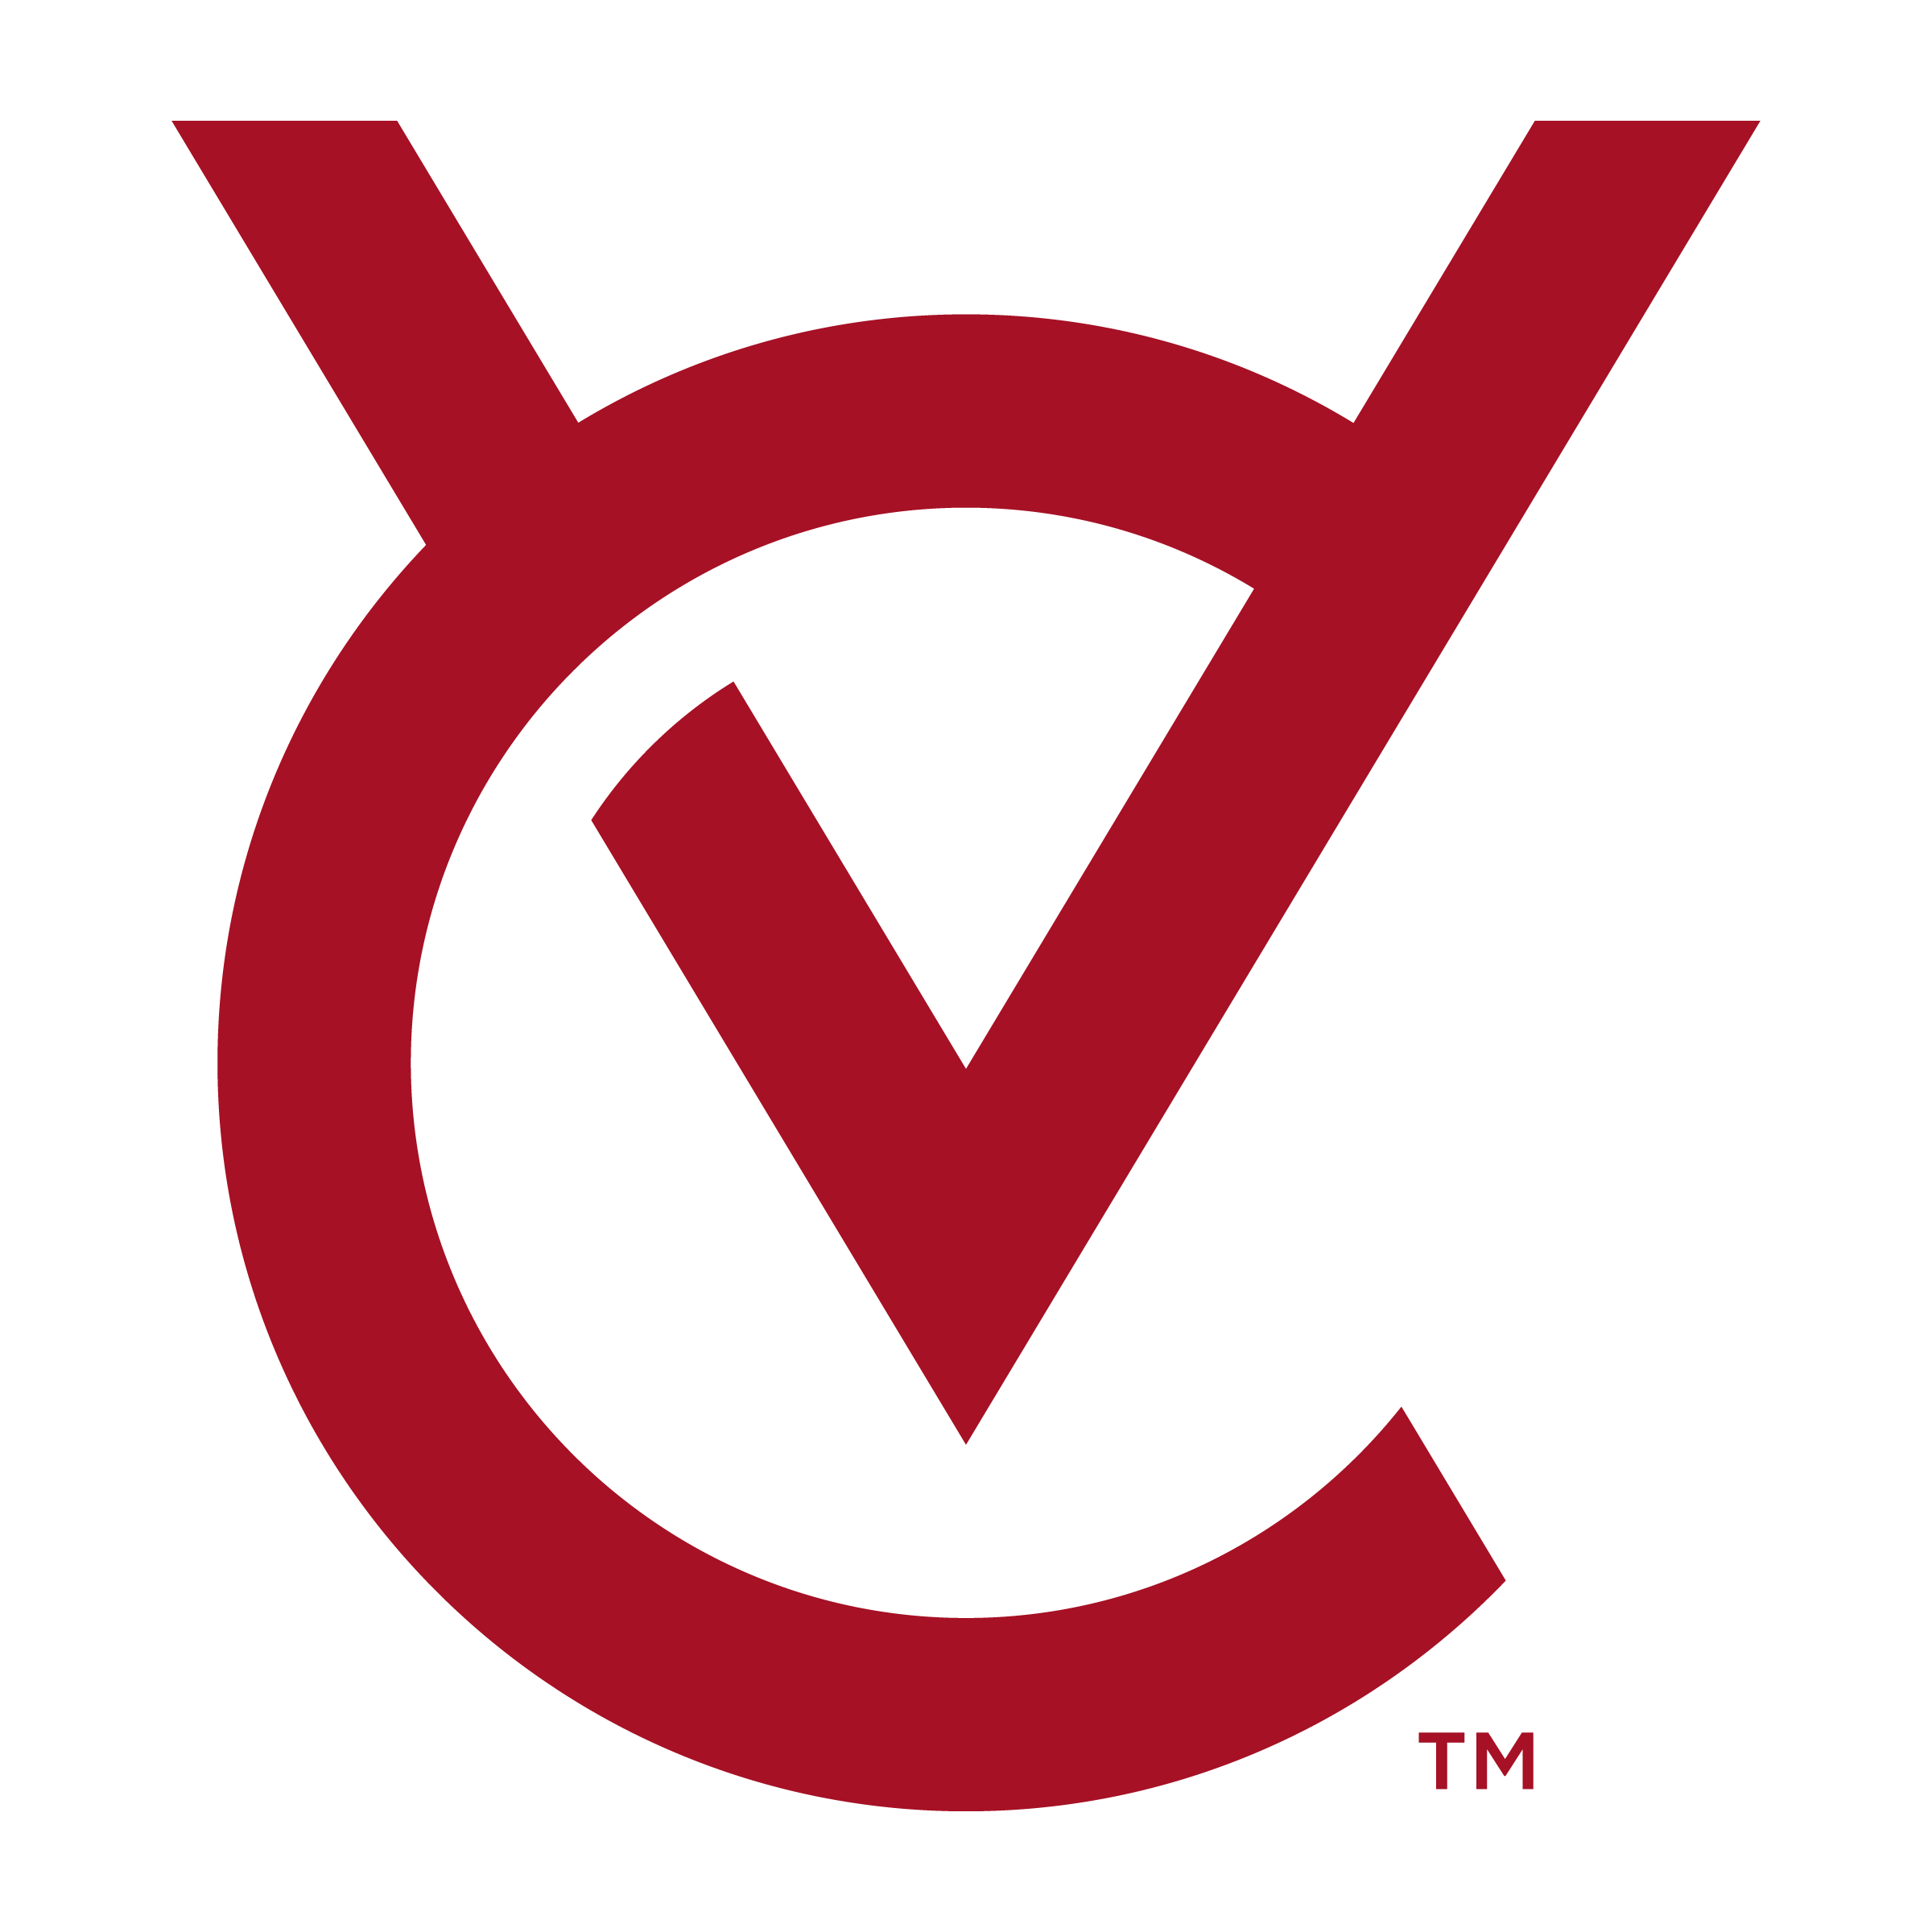 Louisville Cardinal logo by Donovan Sears on Dribbble